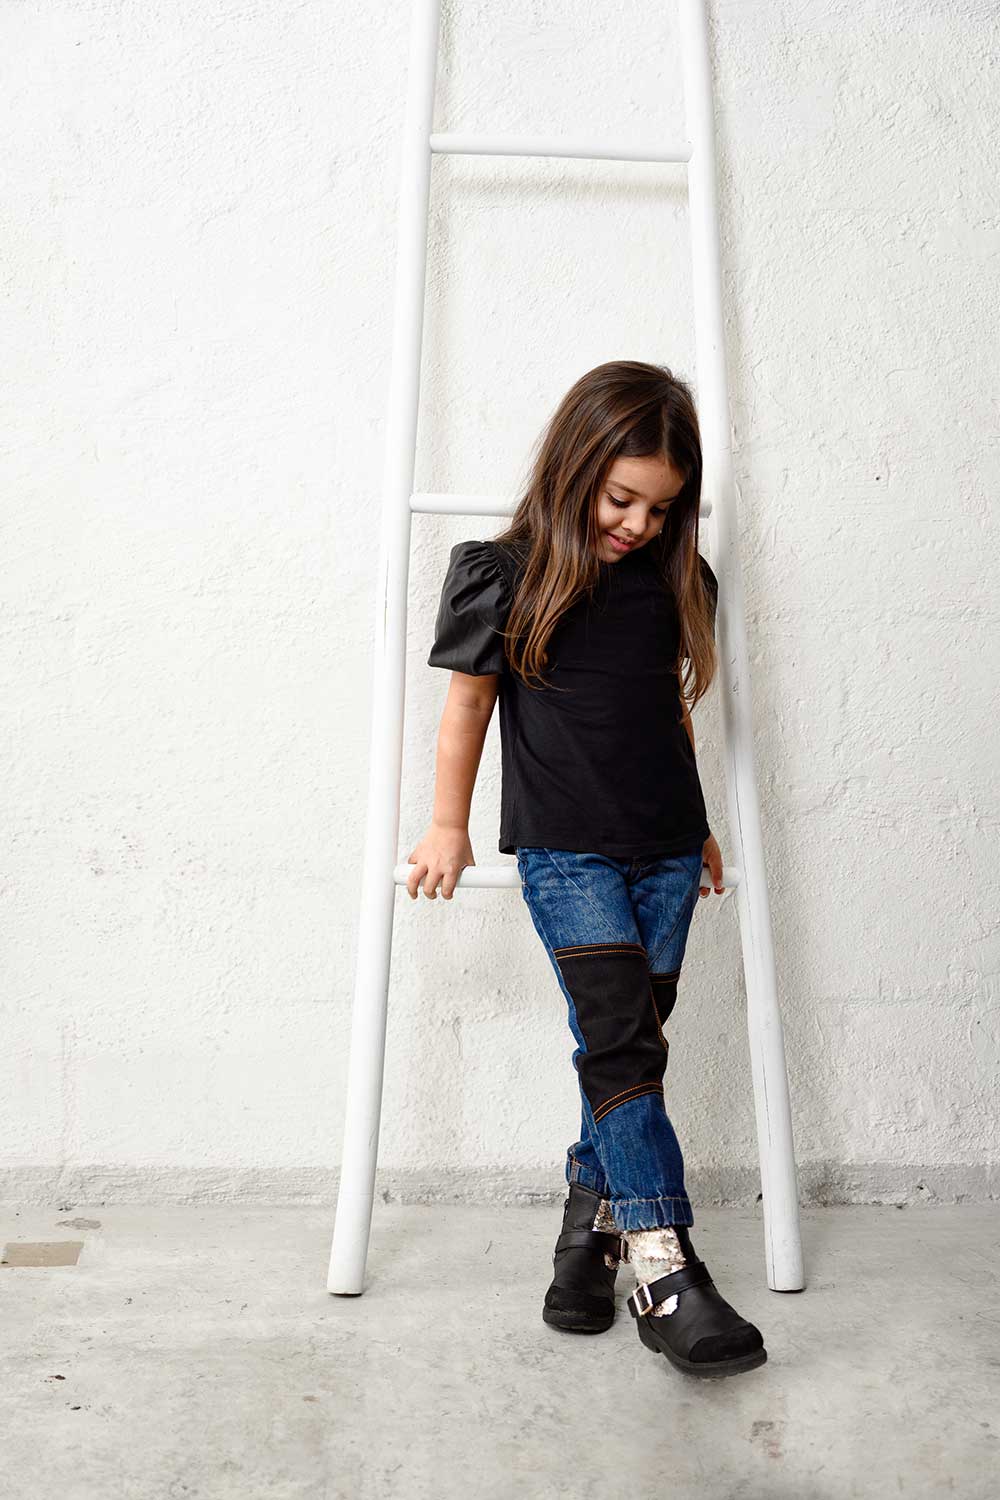 Nimble Patch - Fully Circular Kids' Jeans | CWB Magazine